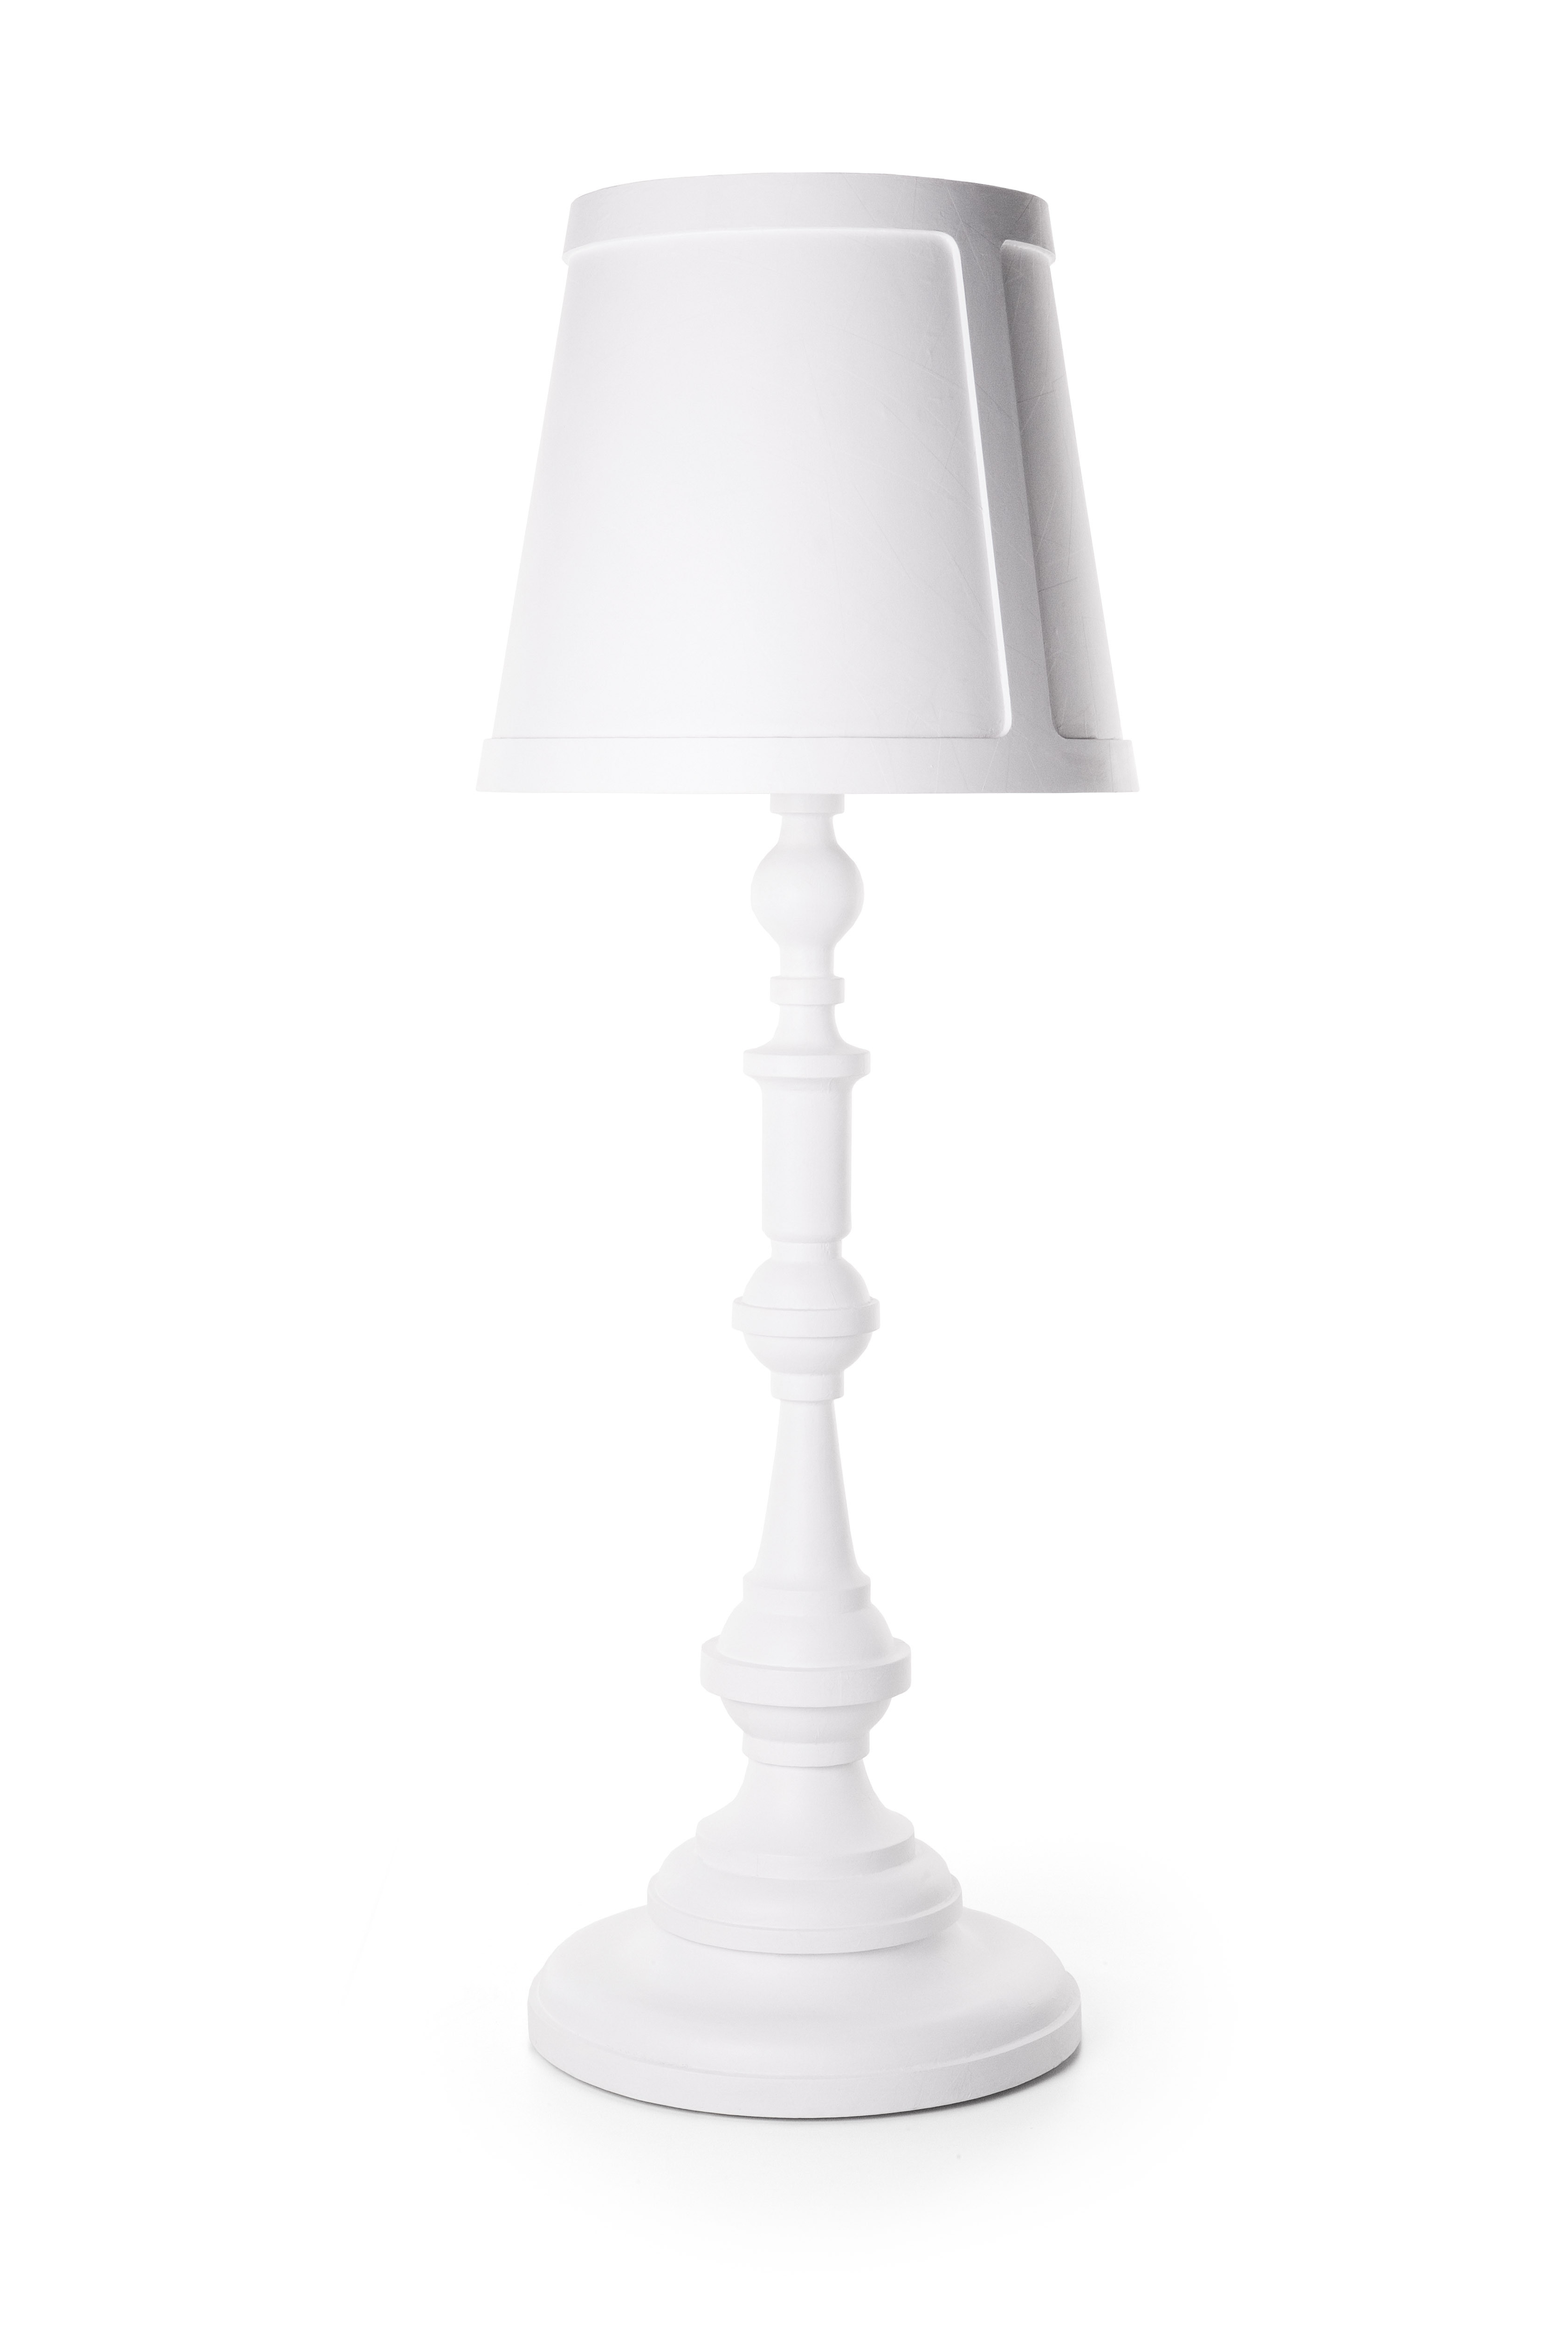 Moooi Paper Floor Lamp intended for measurements 3364 X 5016